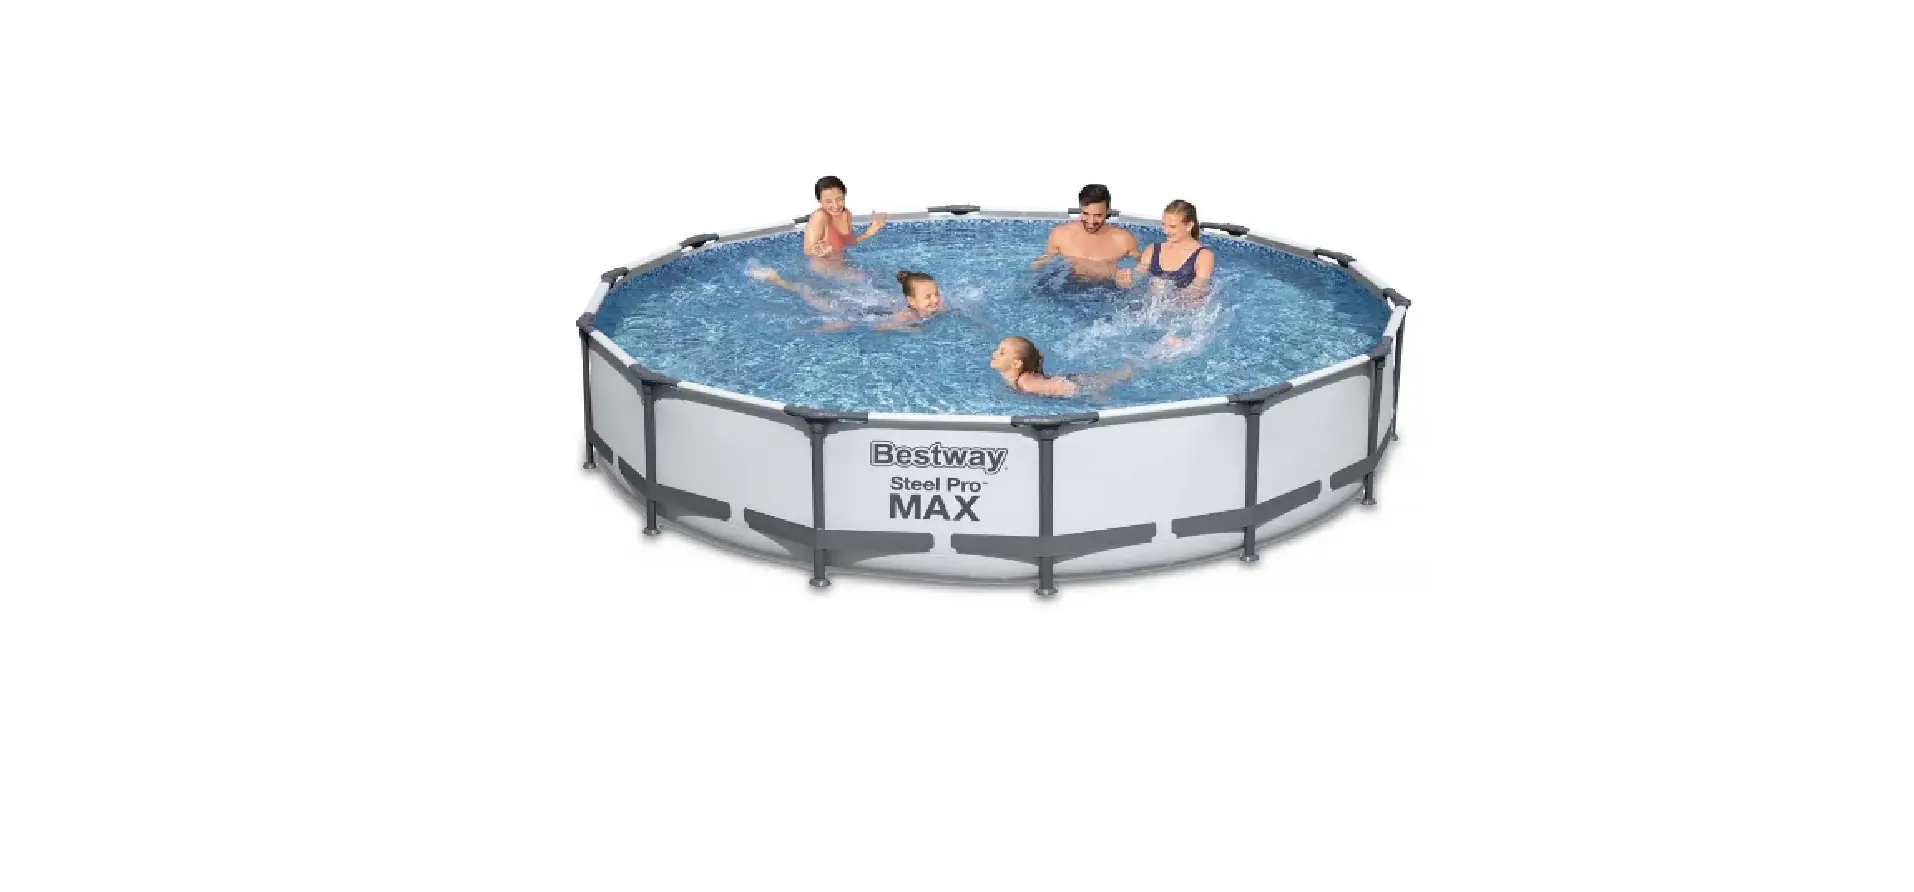 427×84 cm Swimming Pool Steel Pro MAX